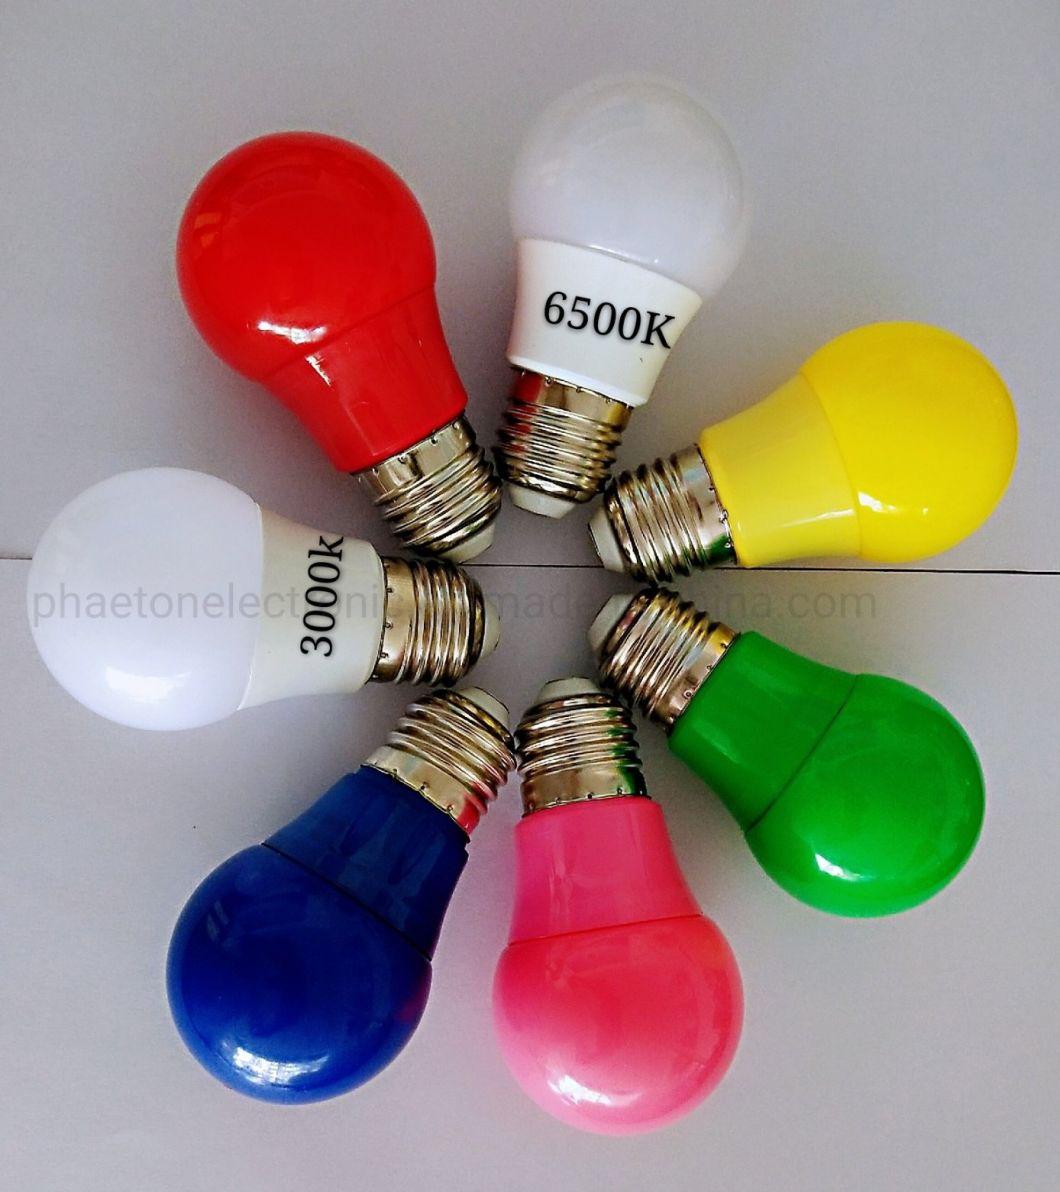 A50 A60 A19 3W SMD Plastic PBT LED Color Bulb